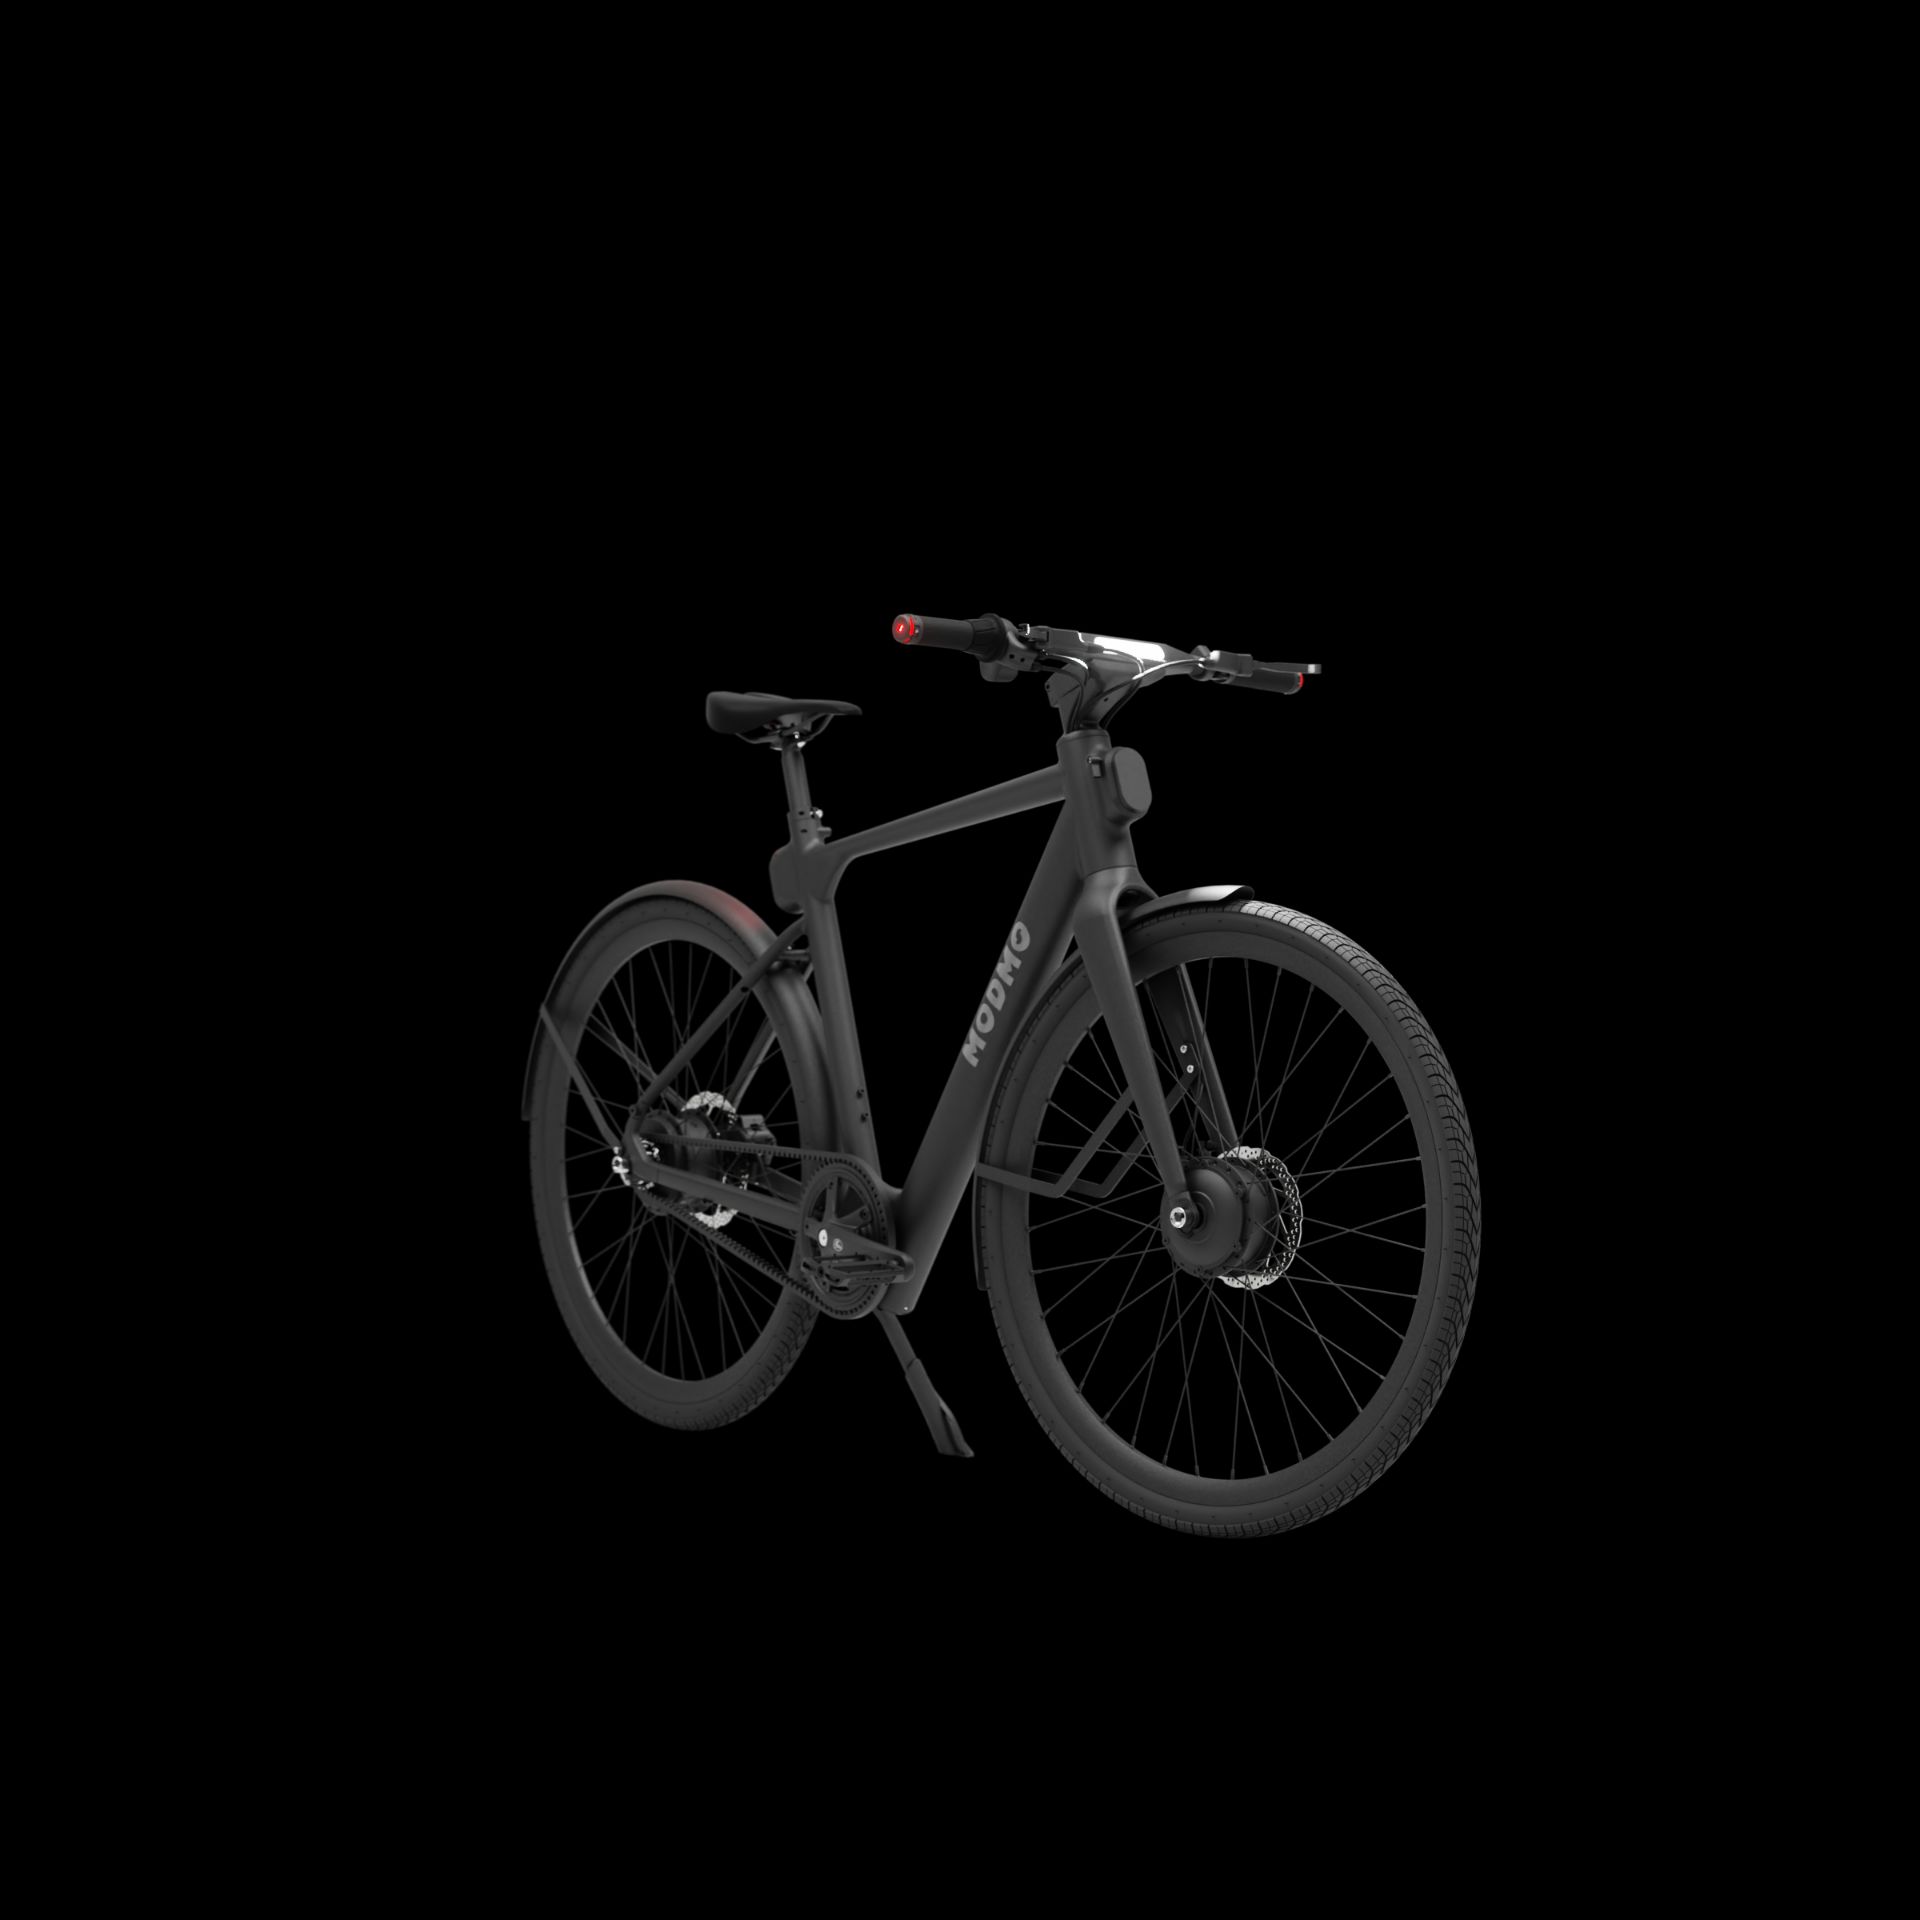 Modmo Saigon+ Electric Bicycle - RRP £2800 - Size M (Rider: 140-155cm) - Image 2 of 19